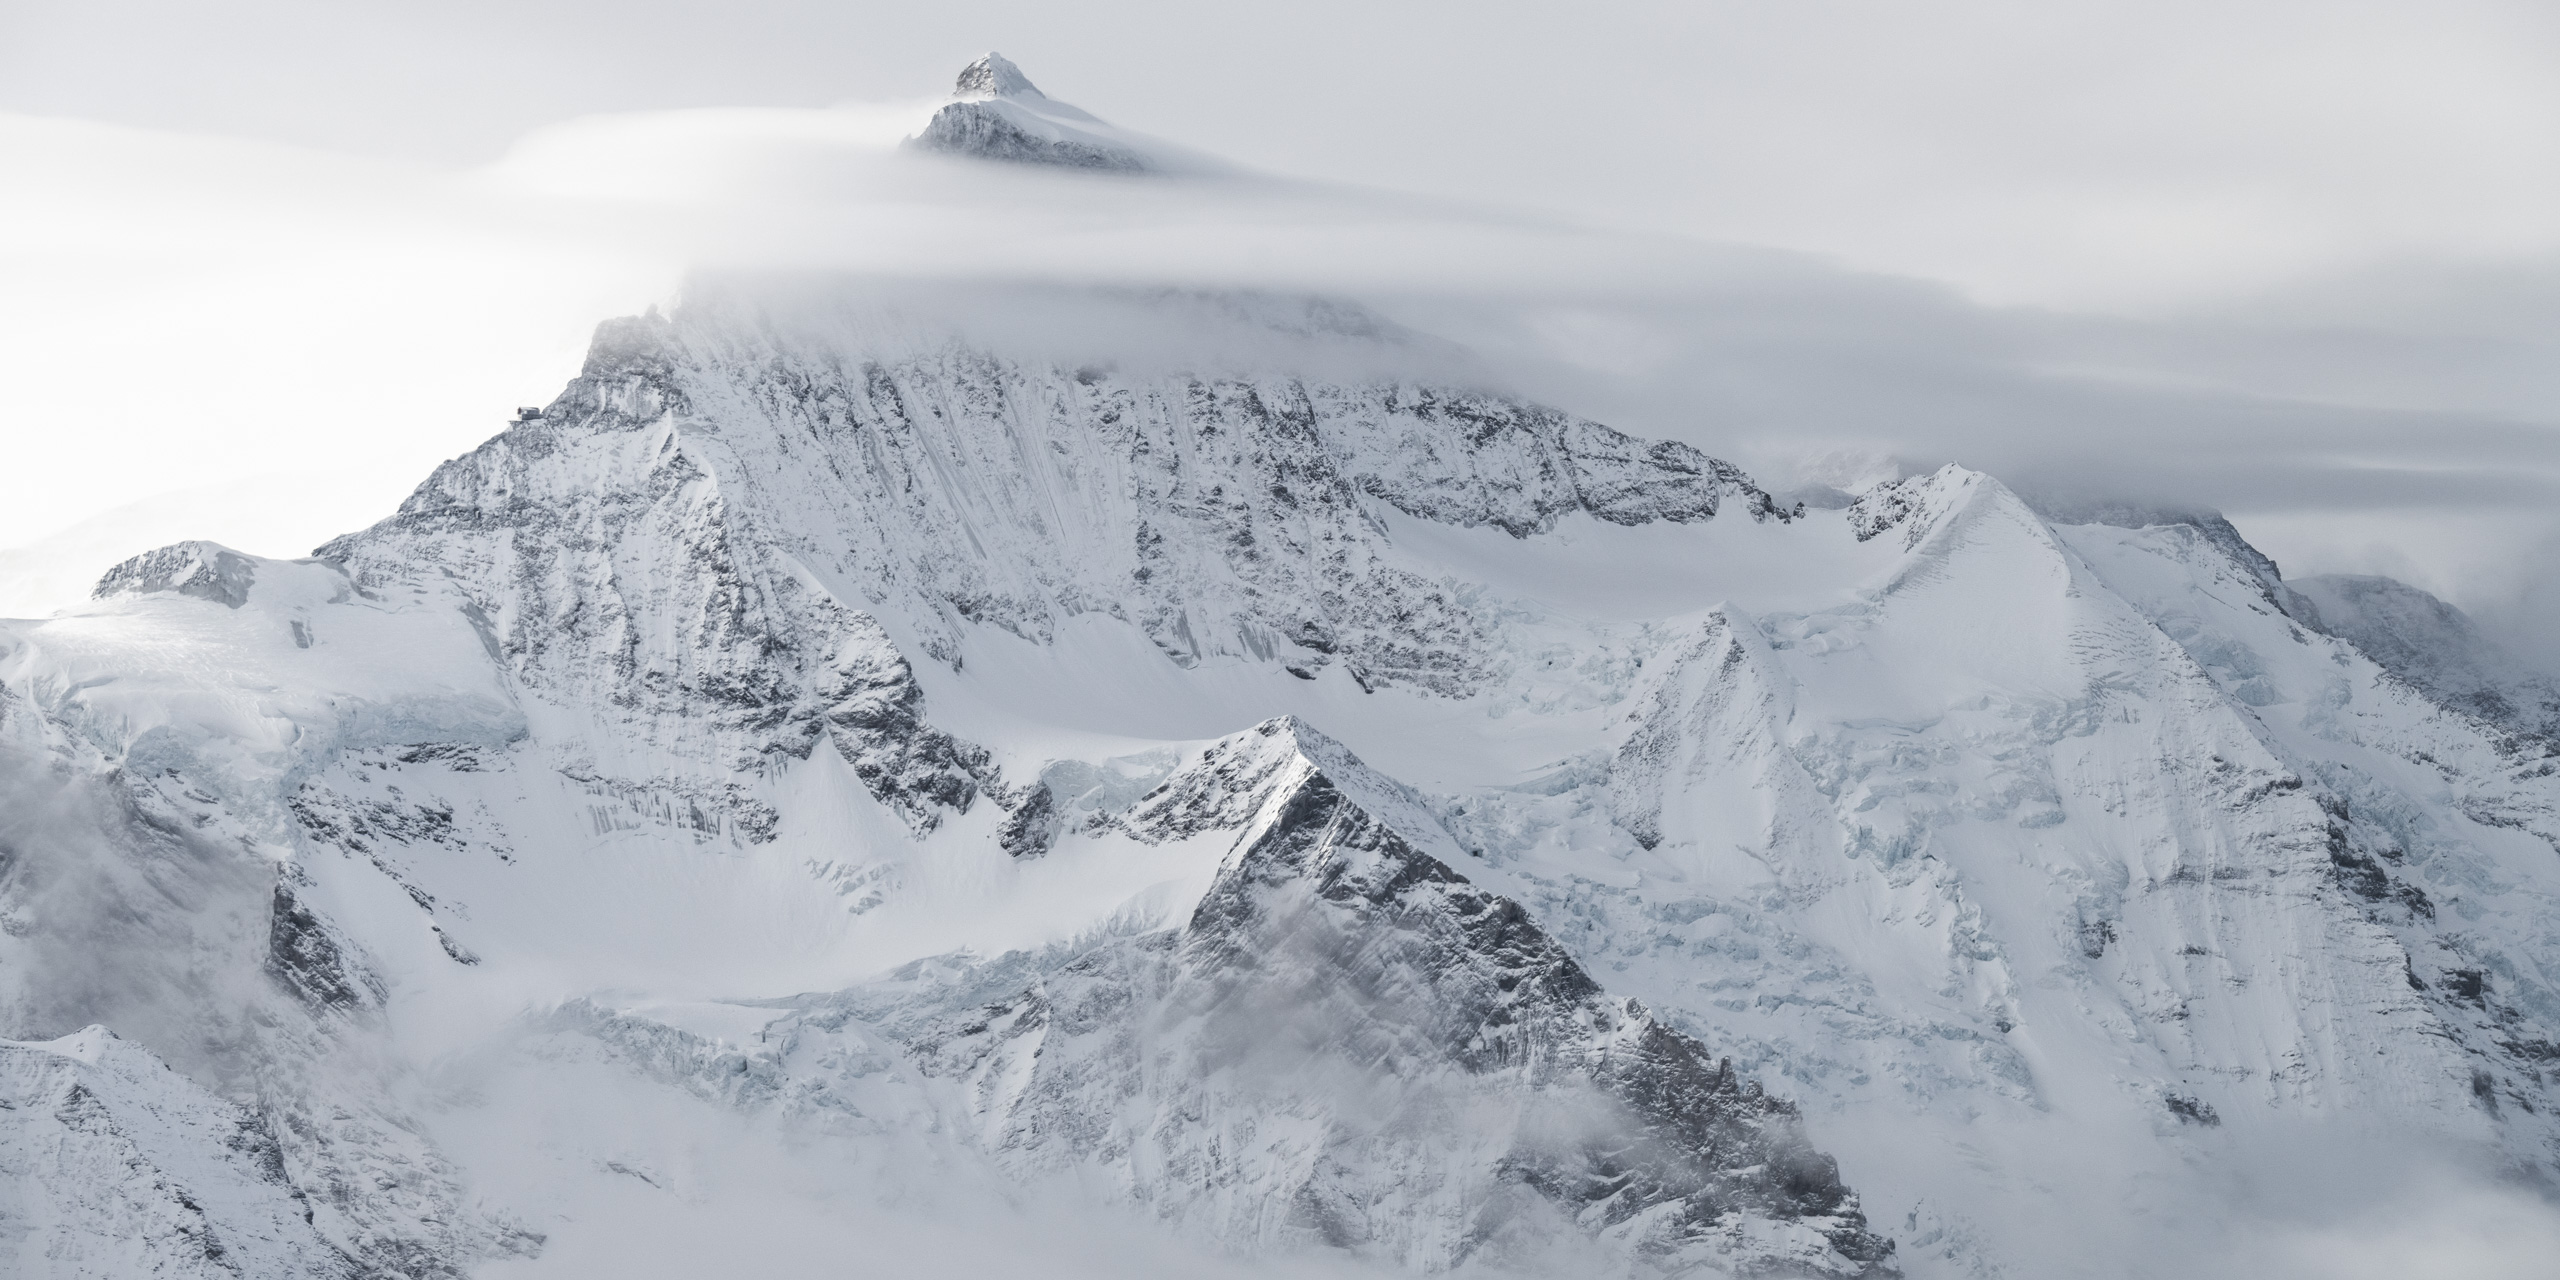 Jungfrau - mountain landscape  image - black and white mountain photo to print